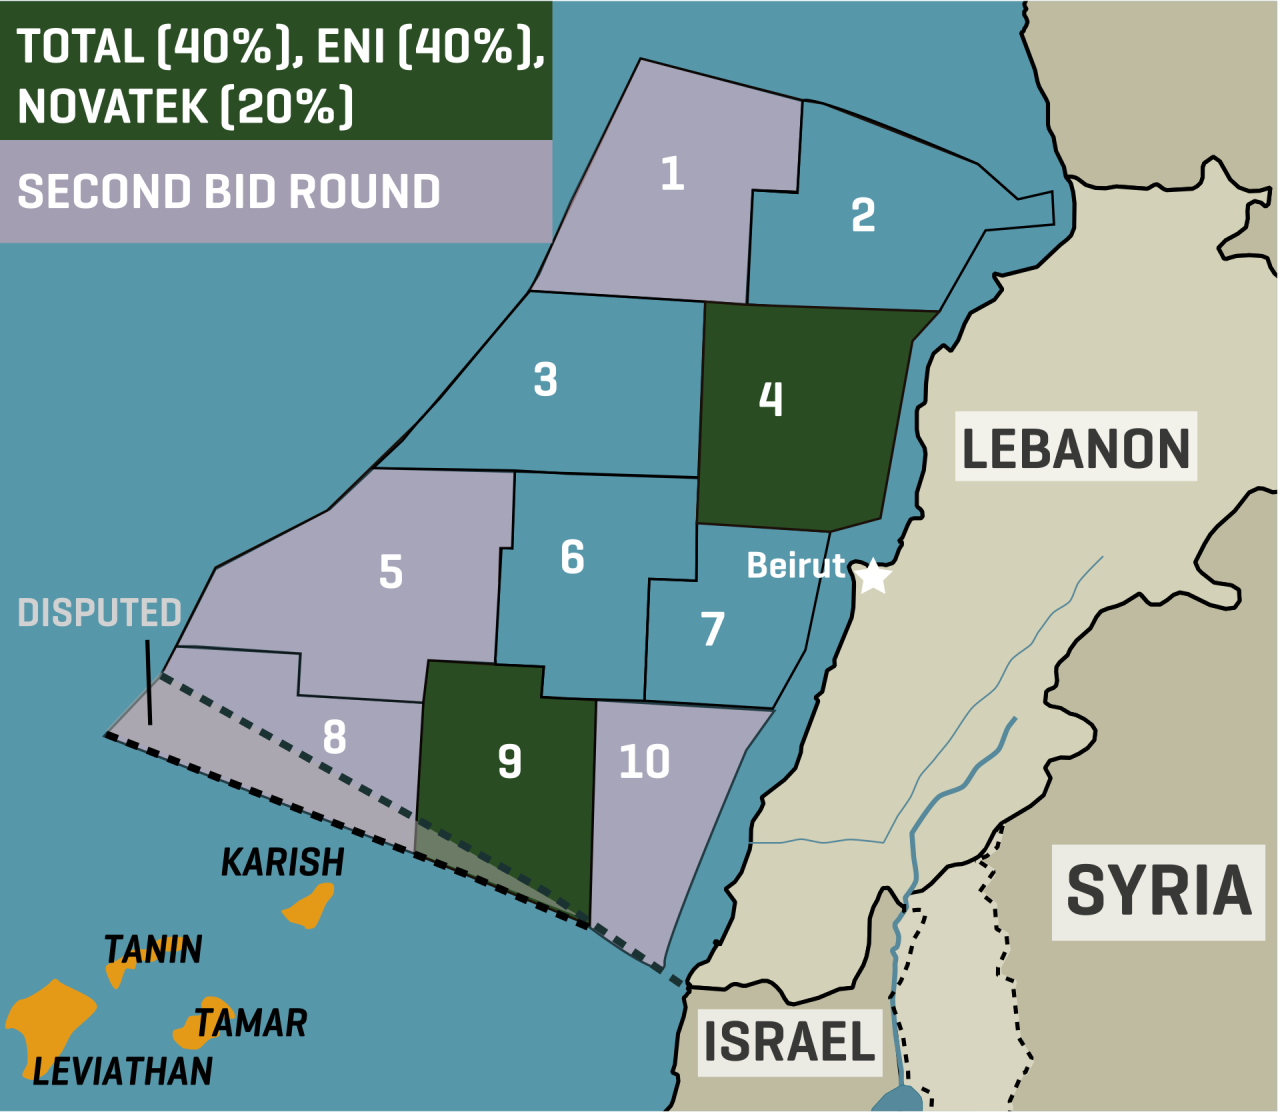 Disputed Oil Block 9 between Lebanon and Israel